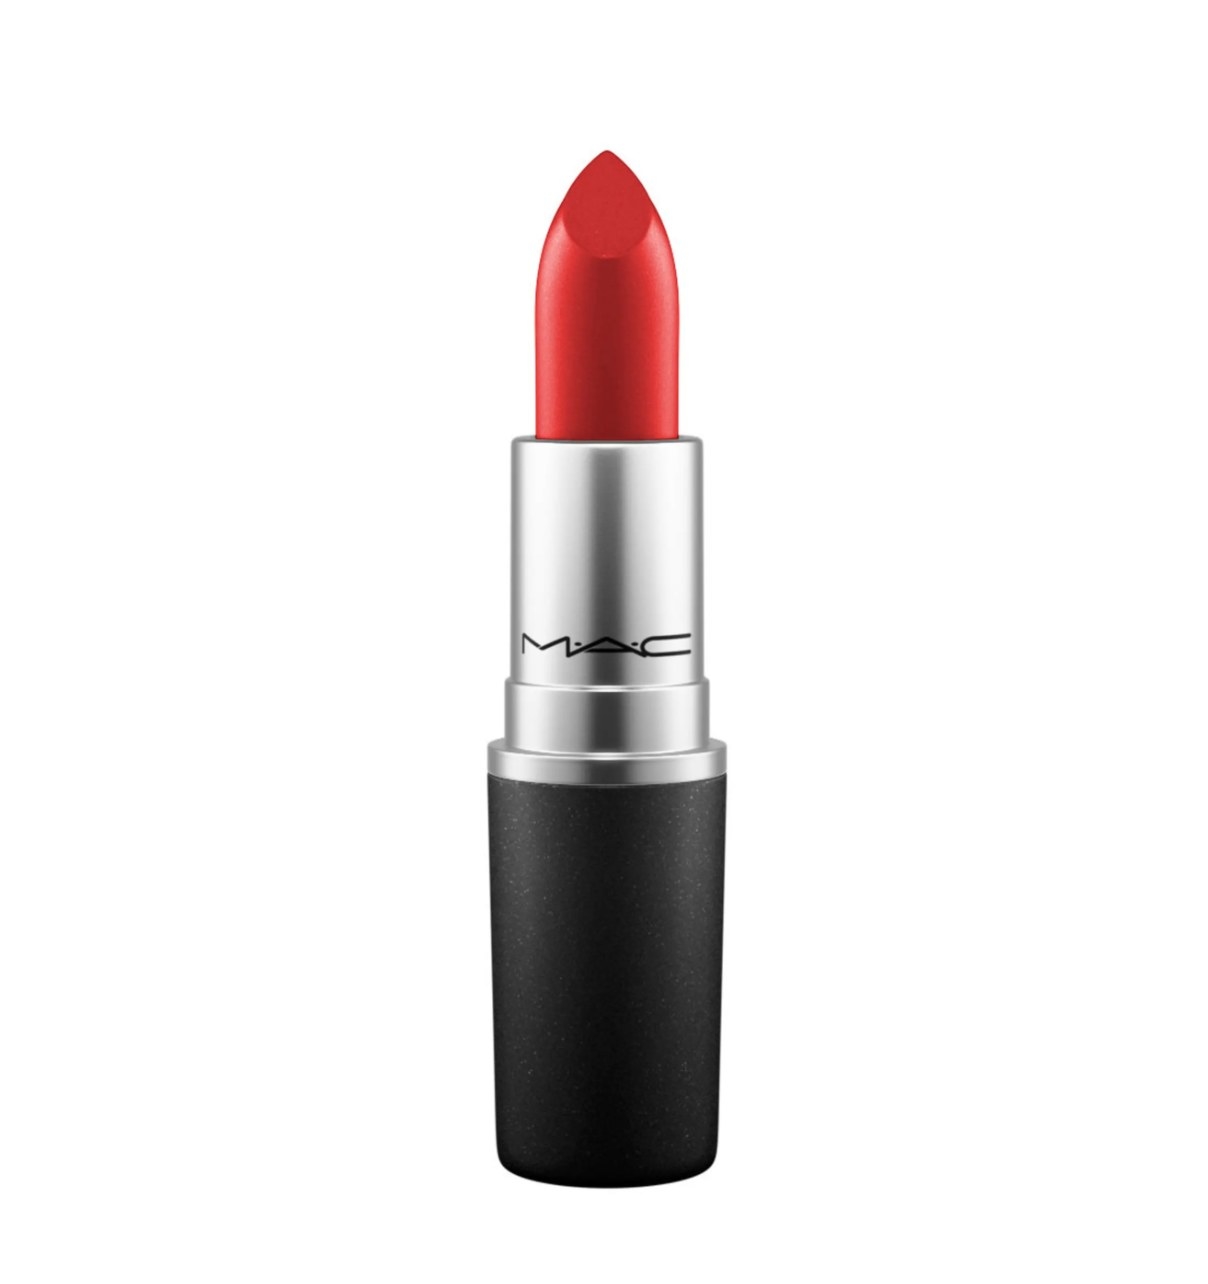 The MAC lustre lipstick in red